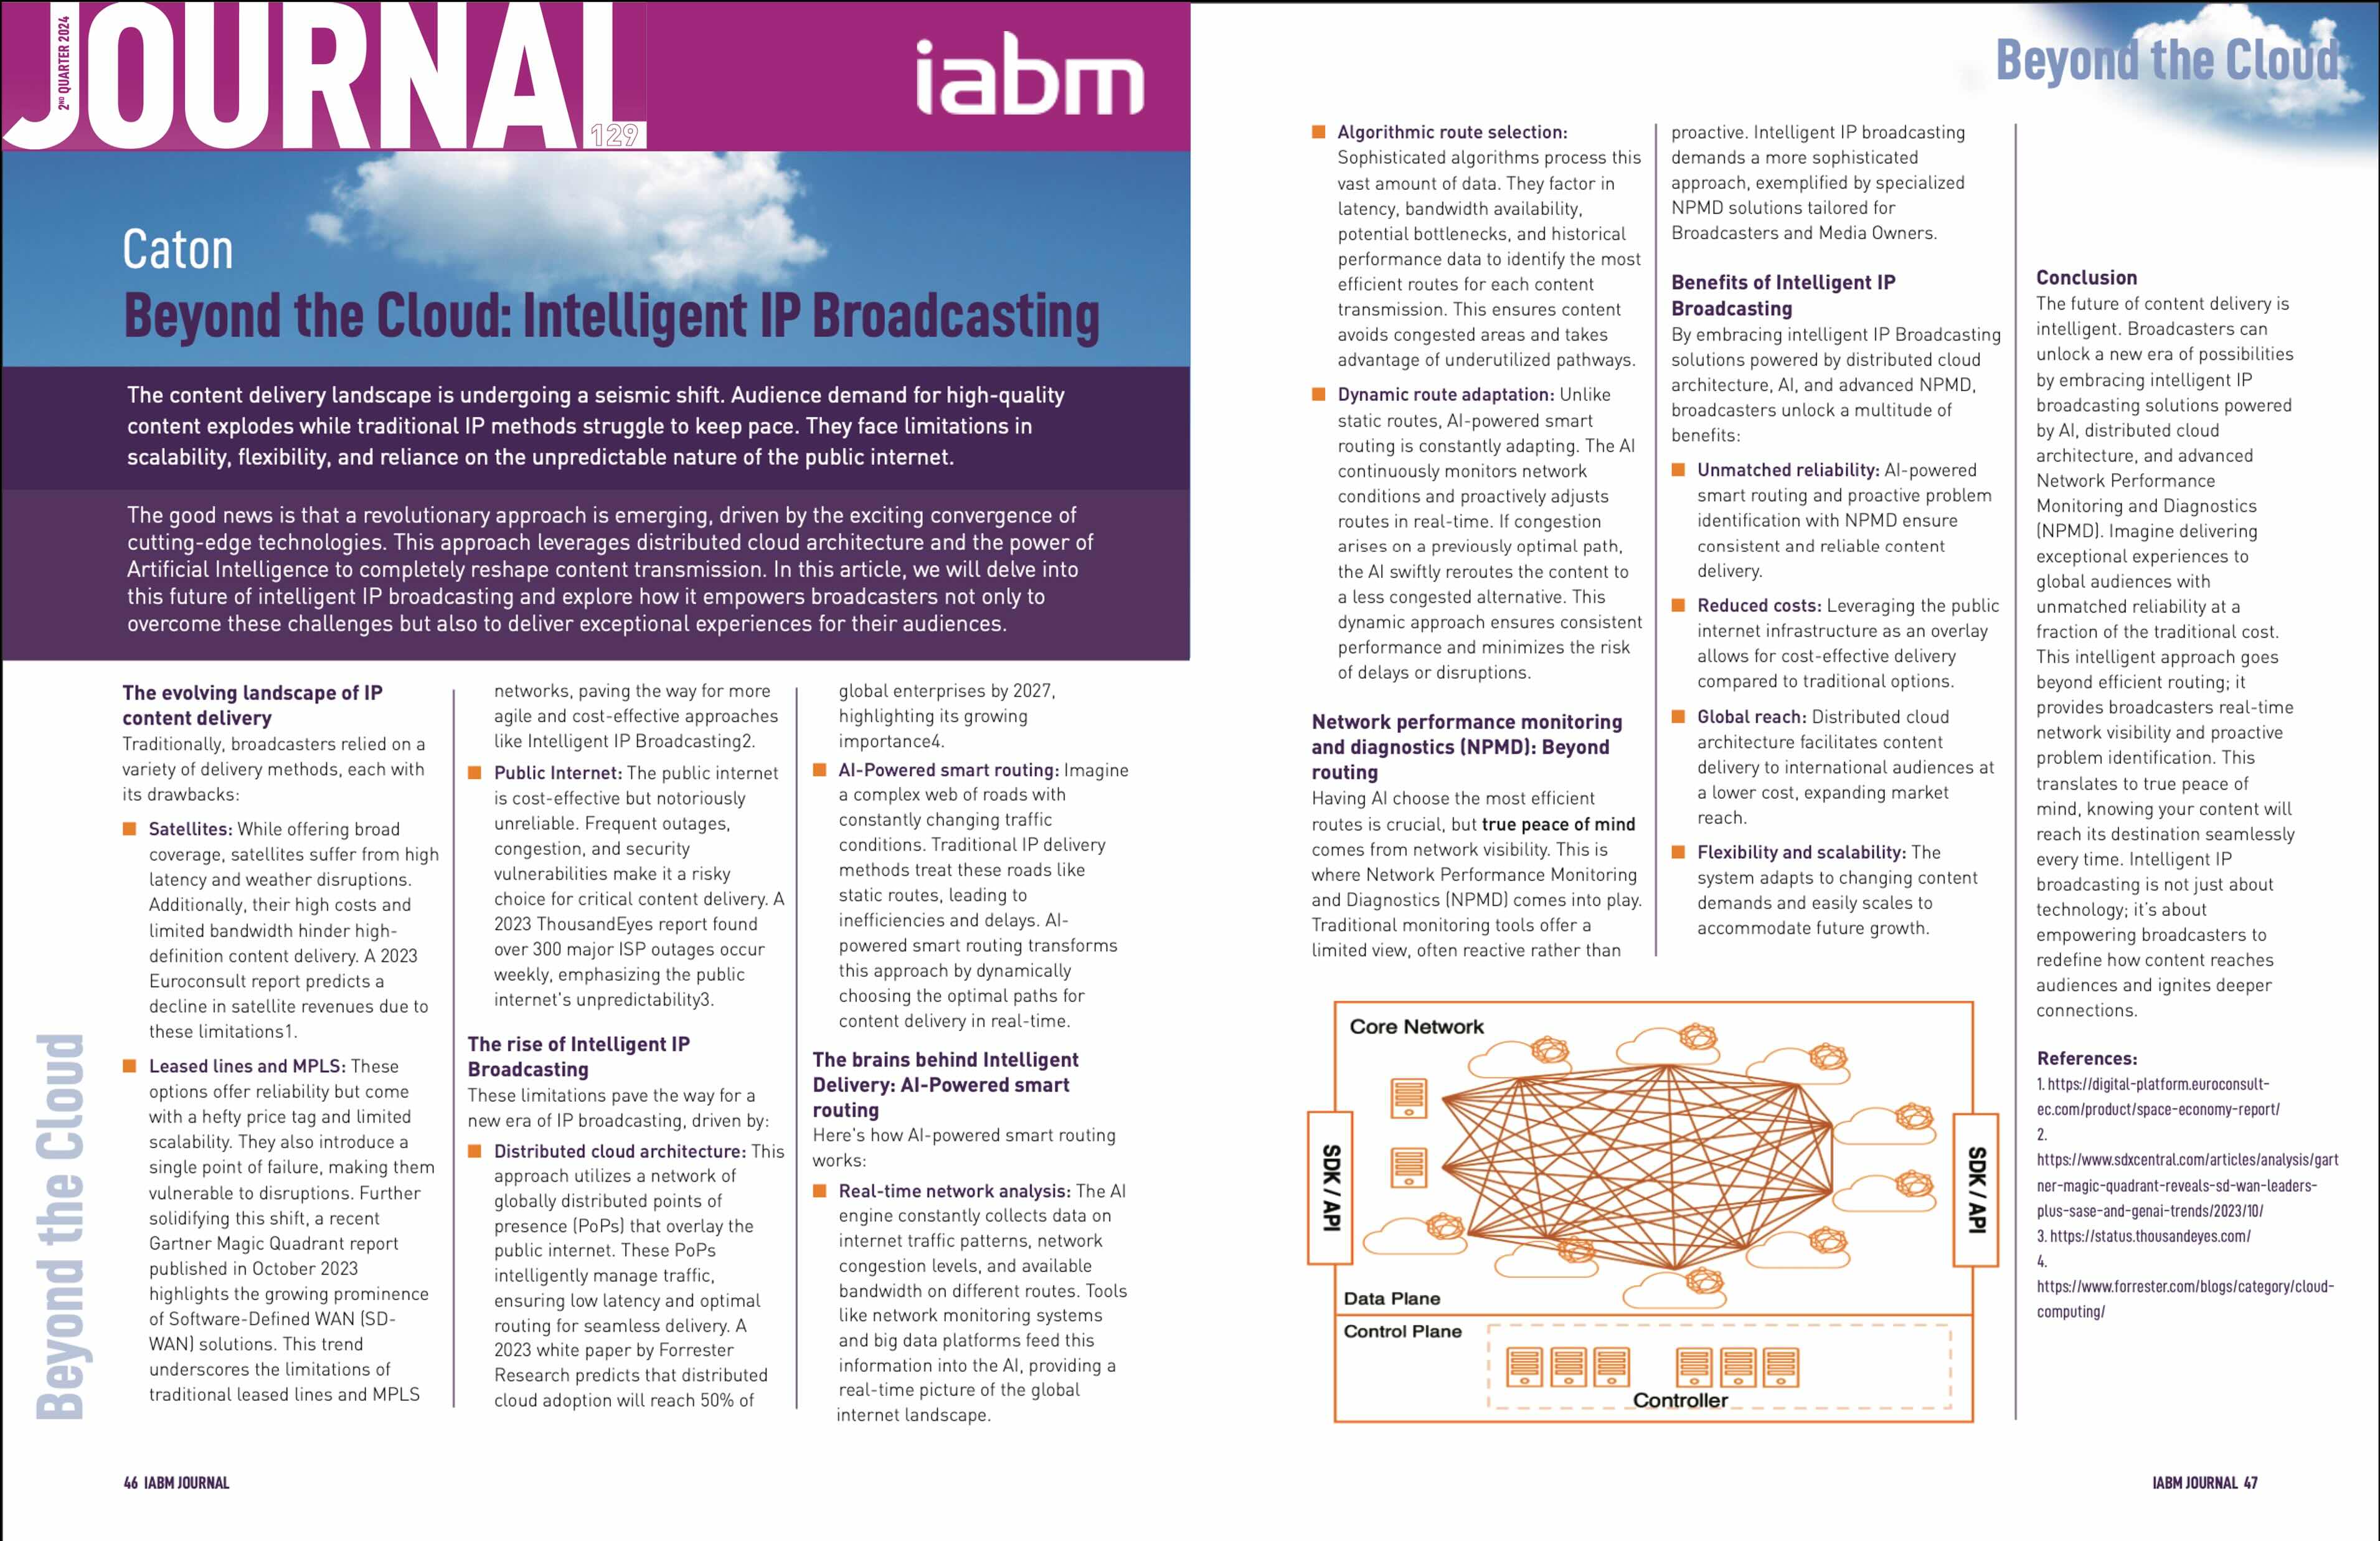 IABM Journal Magazine Spotlight: Intelligent IP Broadcasting